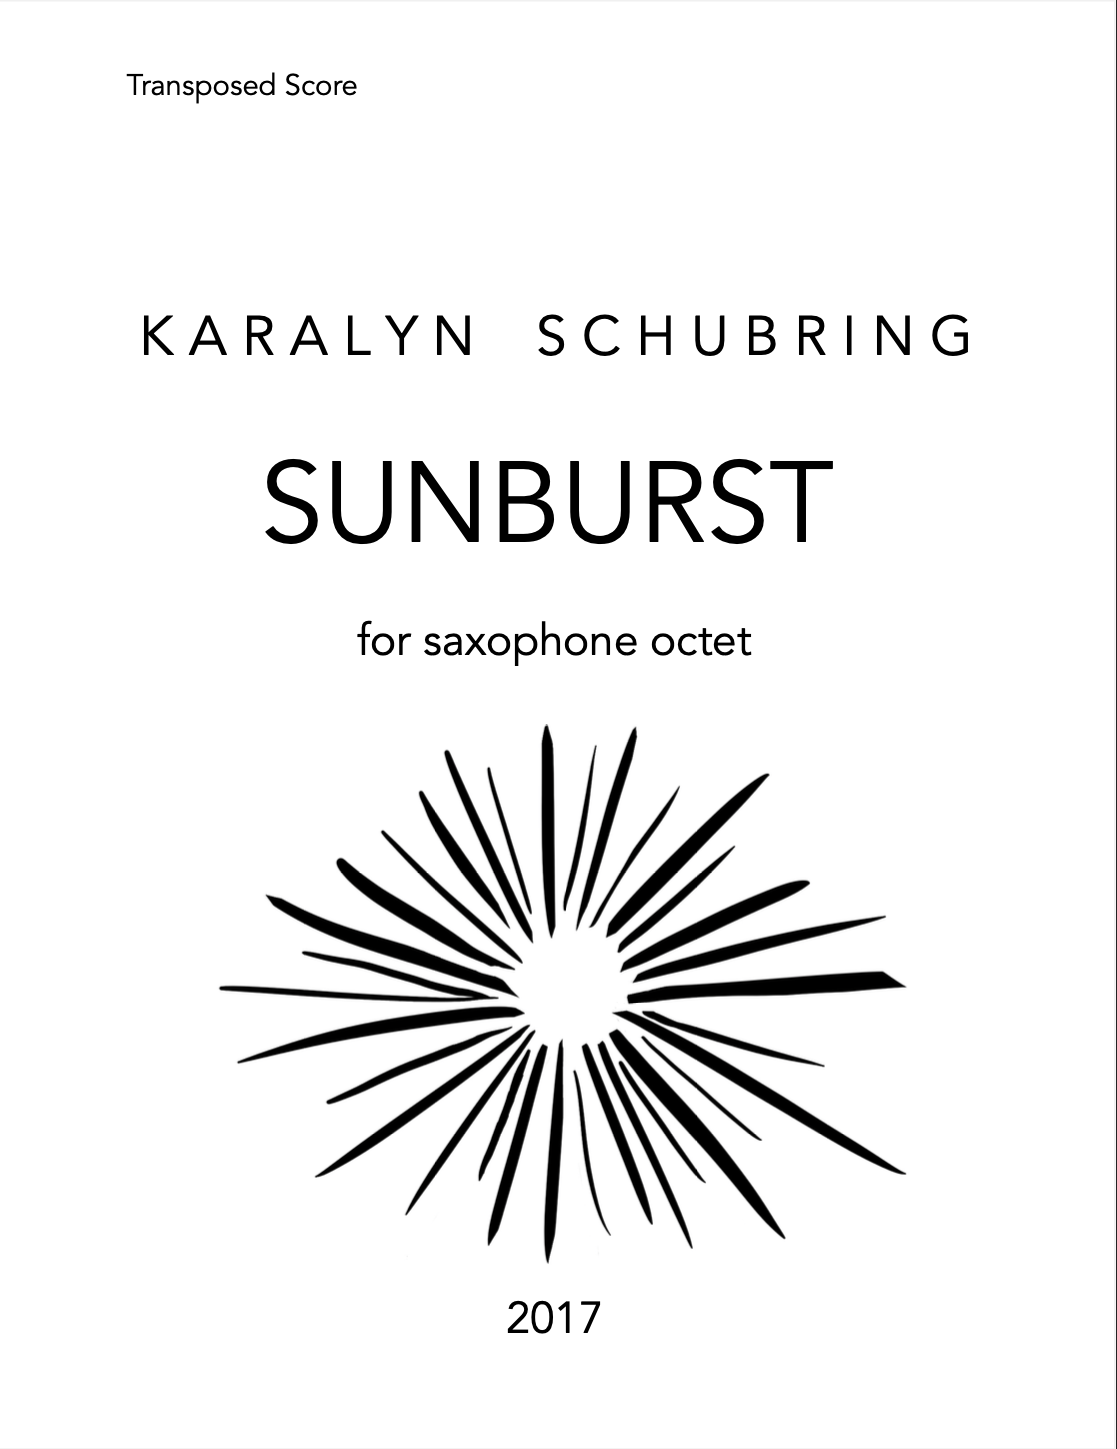 Sunburst by Karalyn Schubring